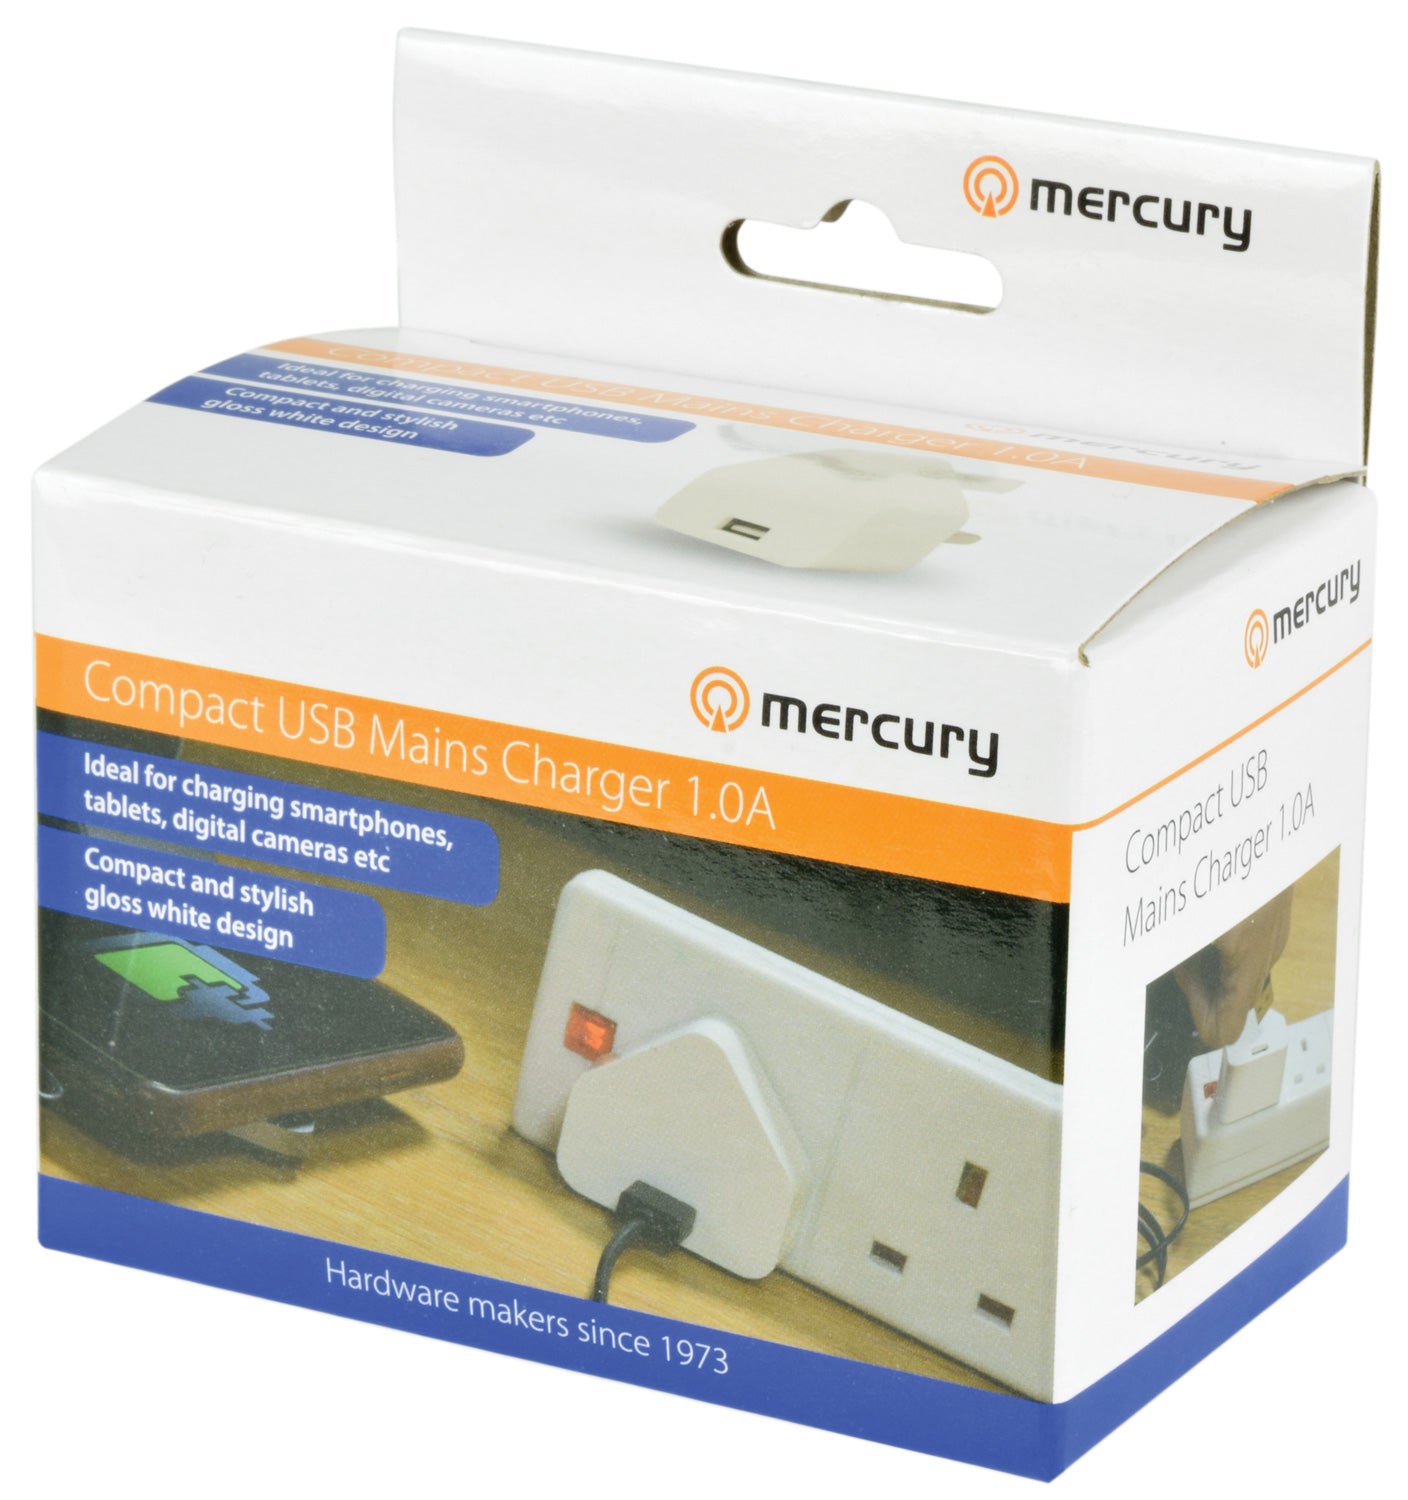 Mercury Compact USB Charger 1.0A 421.749UK